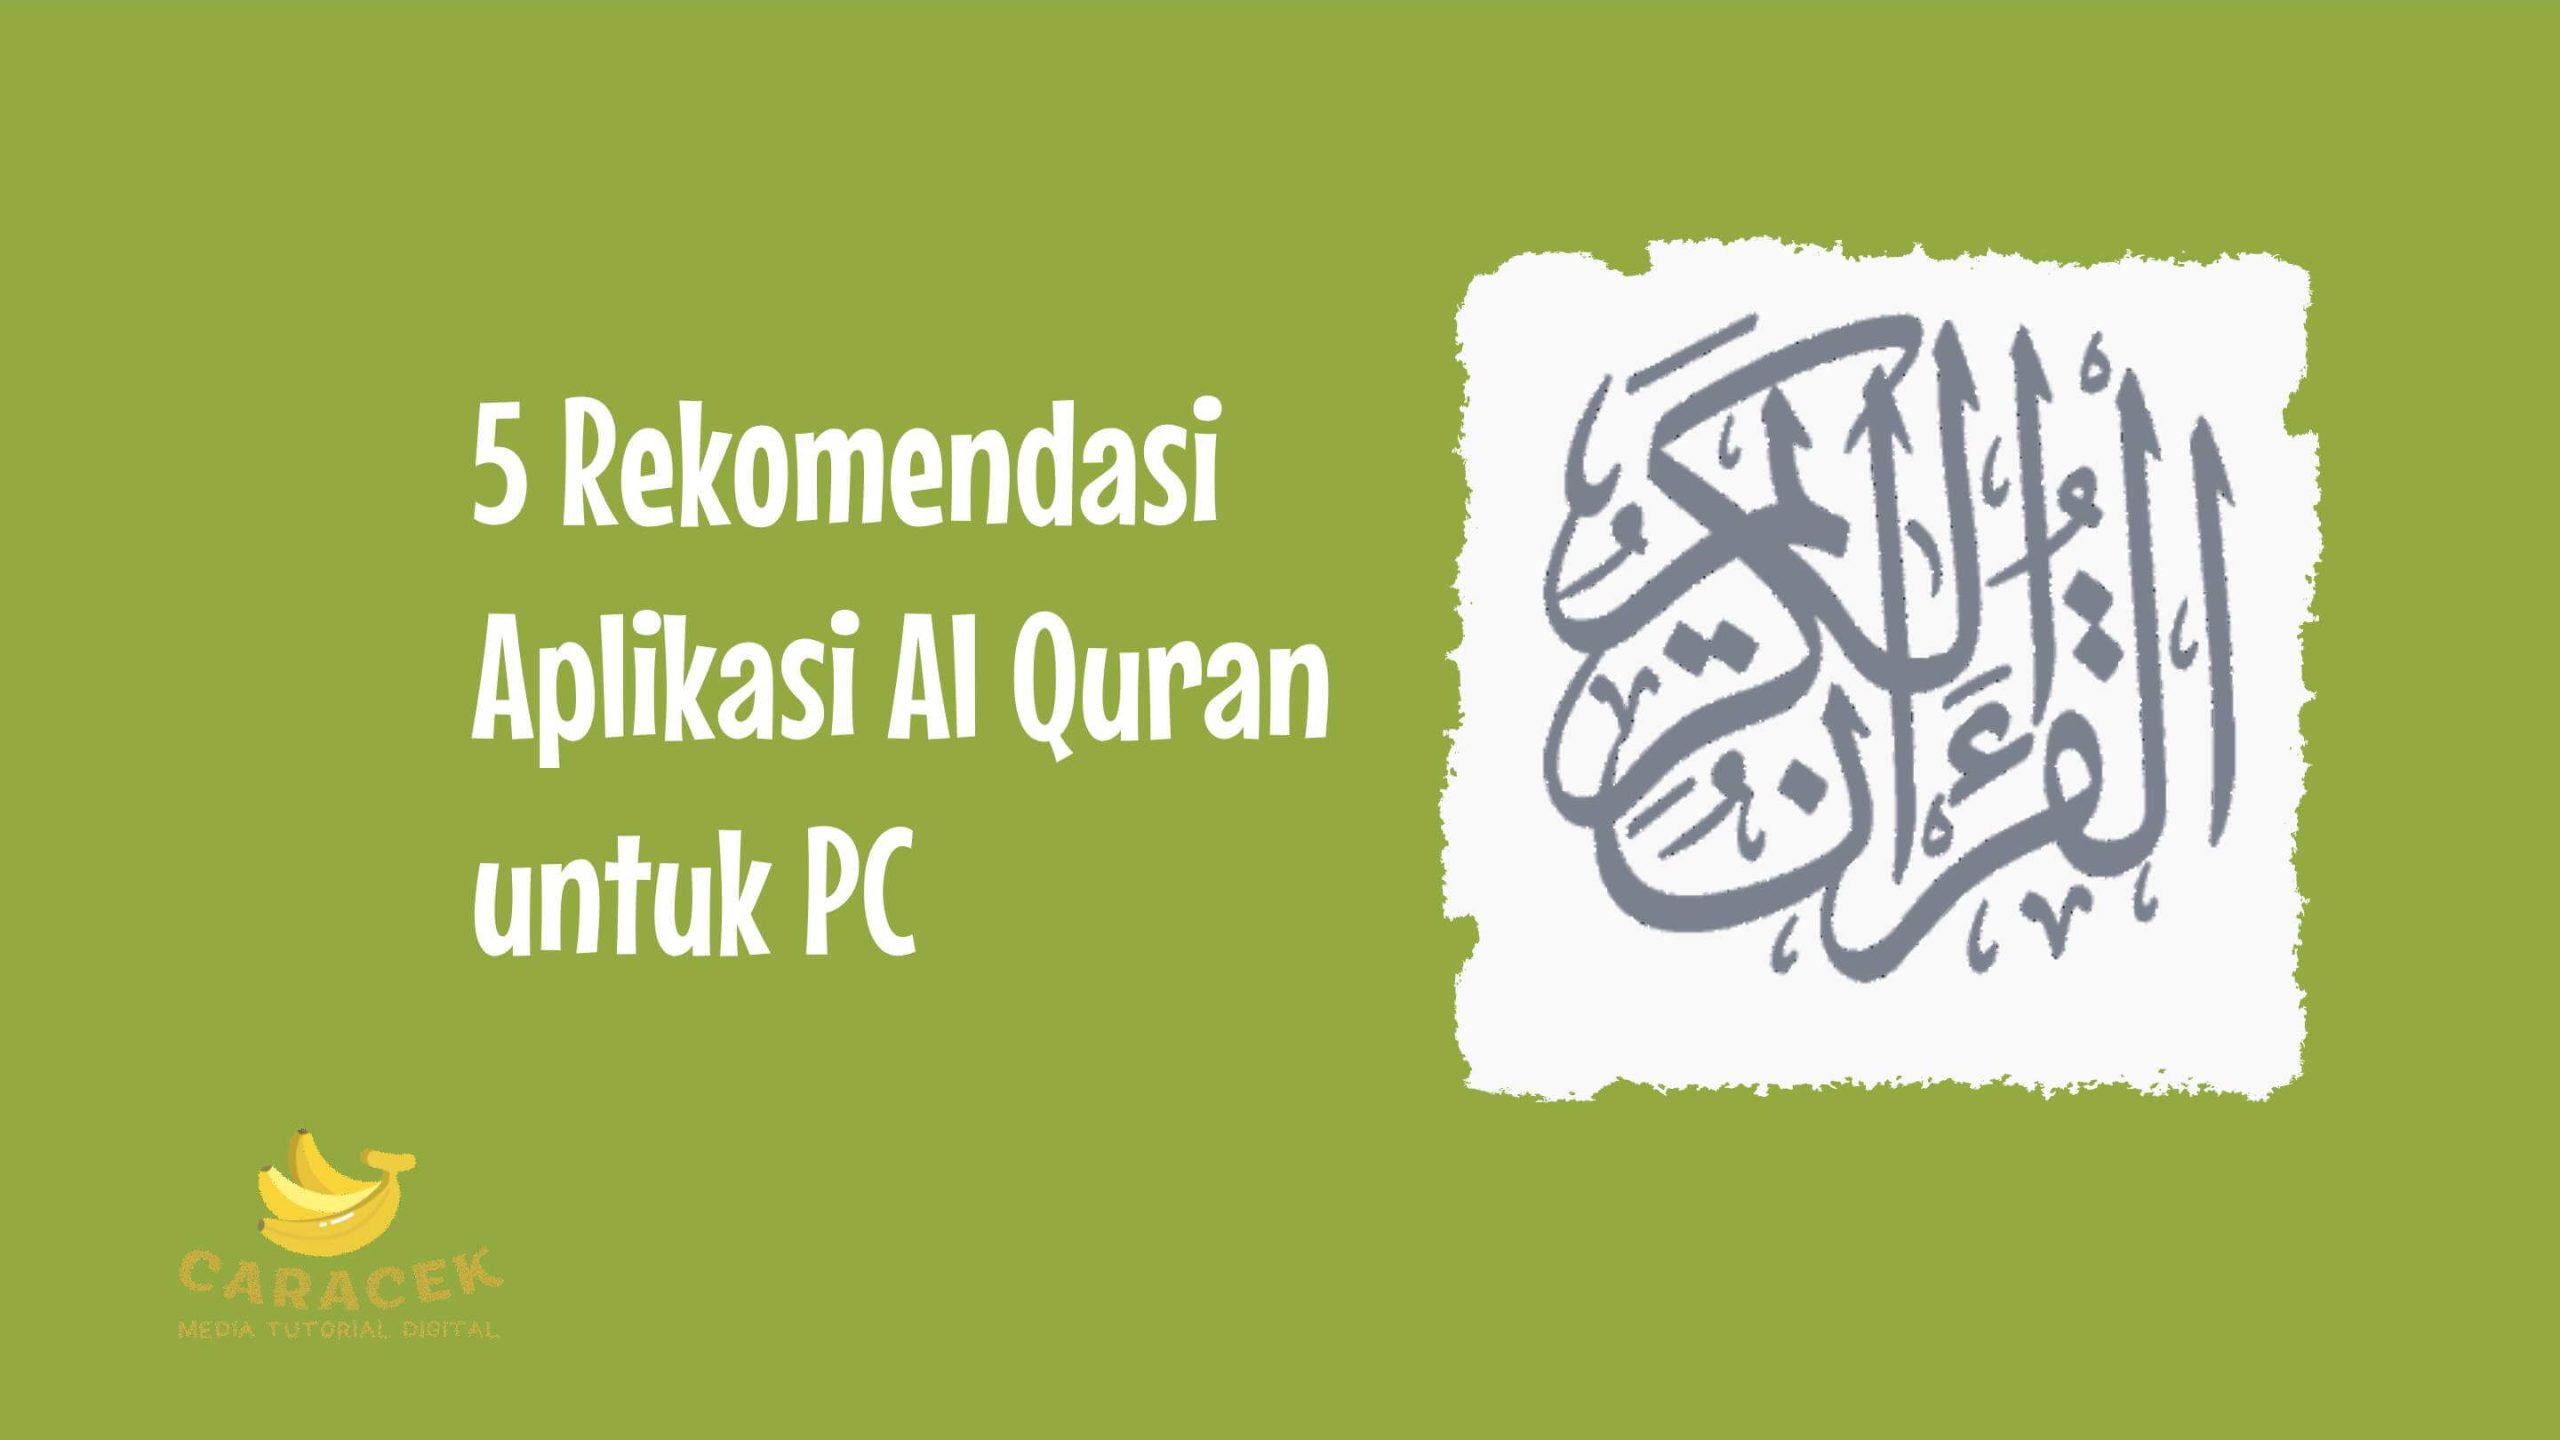 Aplikasi Al Quran untuk PC